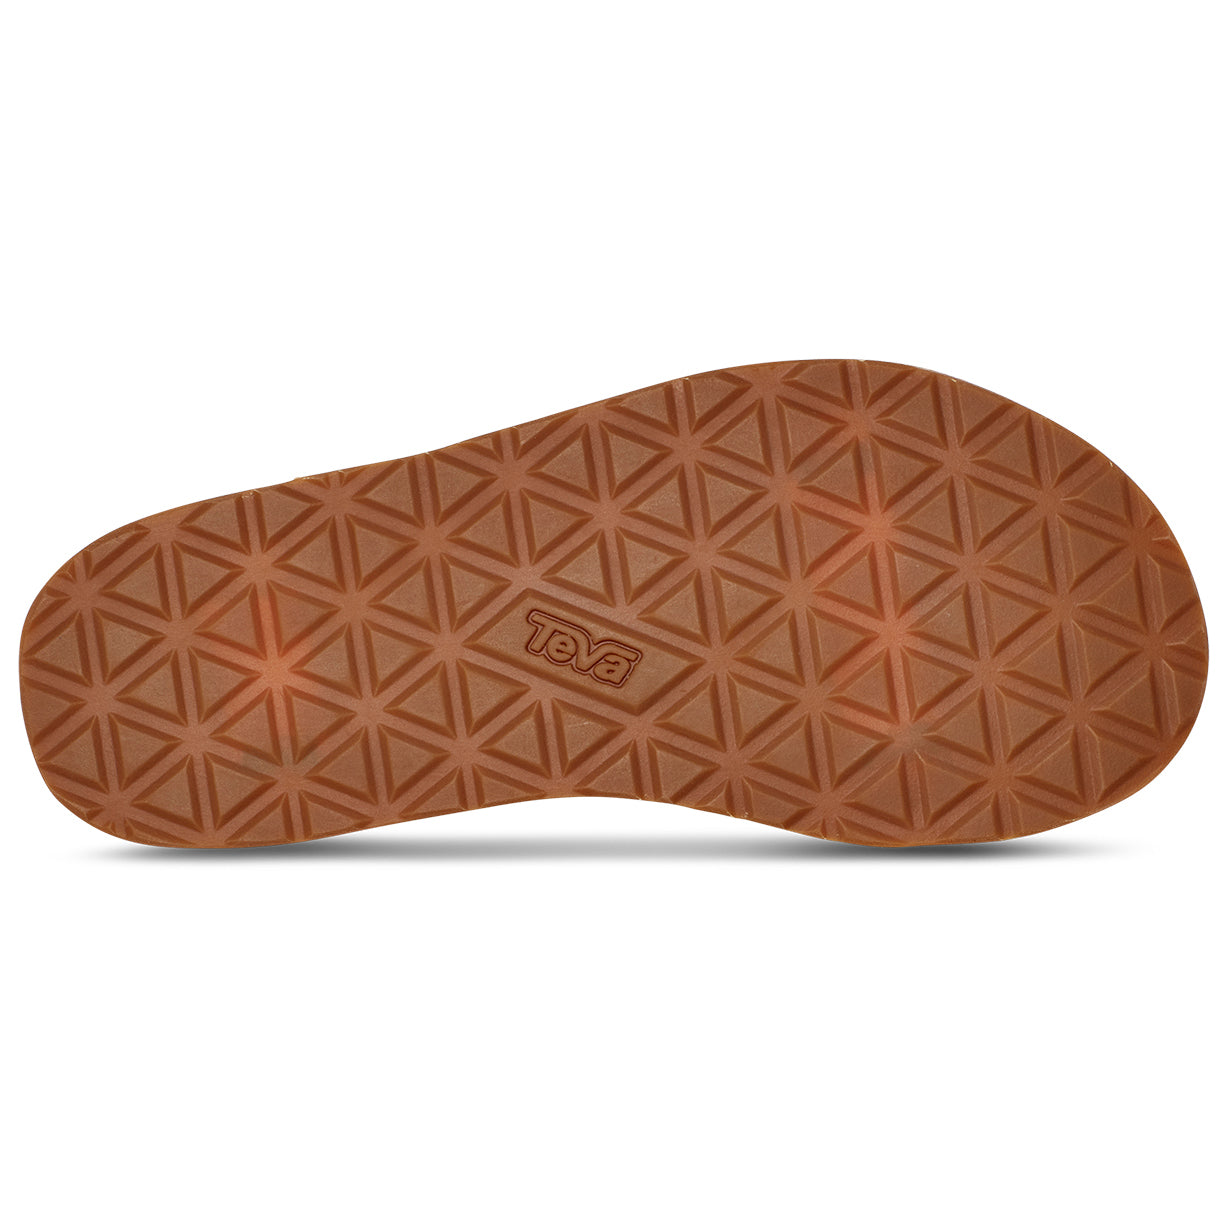 Teva Women´s Original Universal Leather Damen Sandale braun